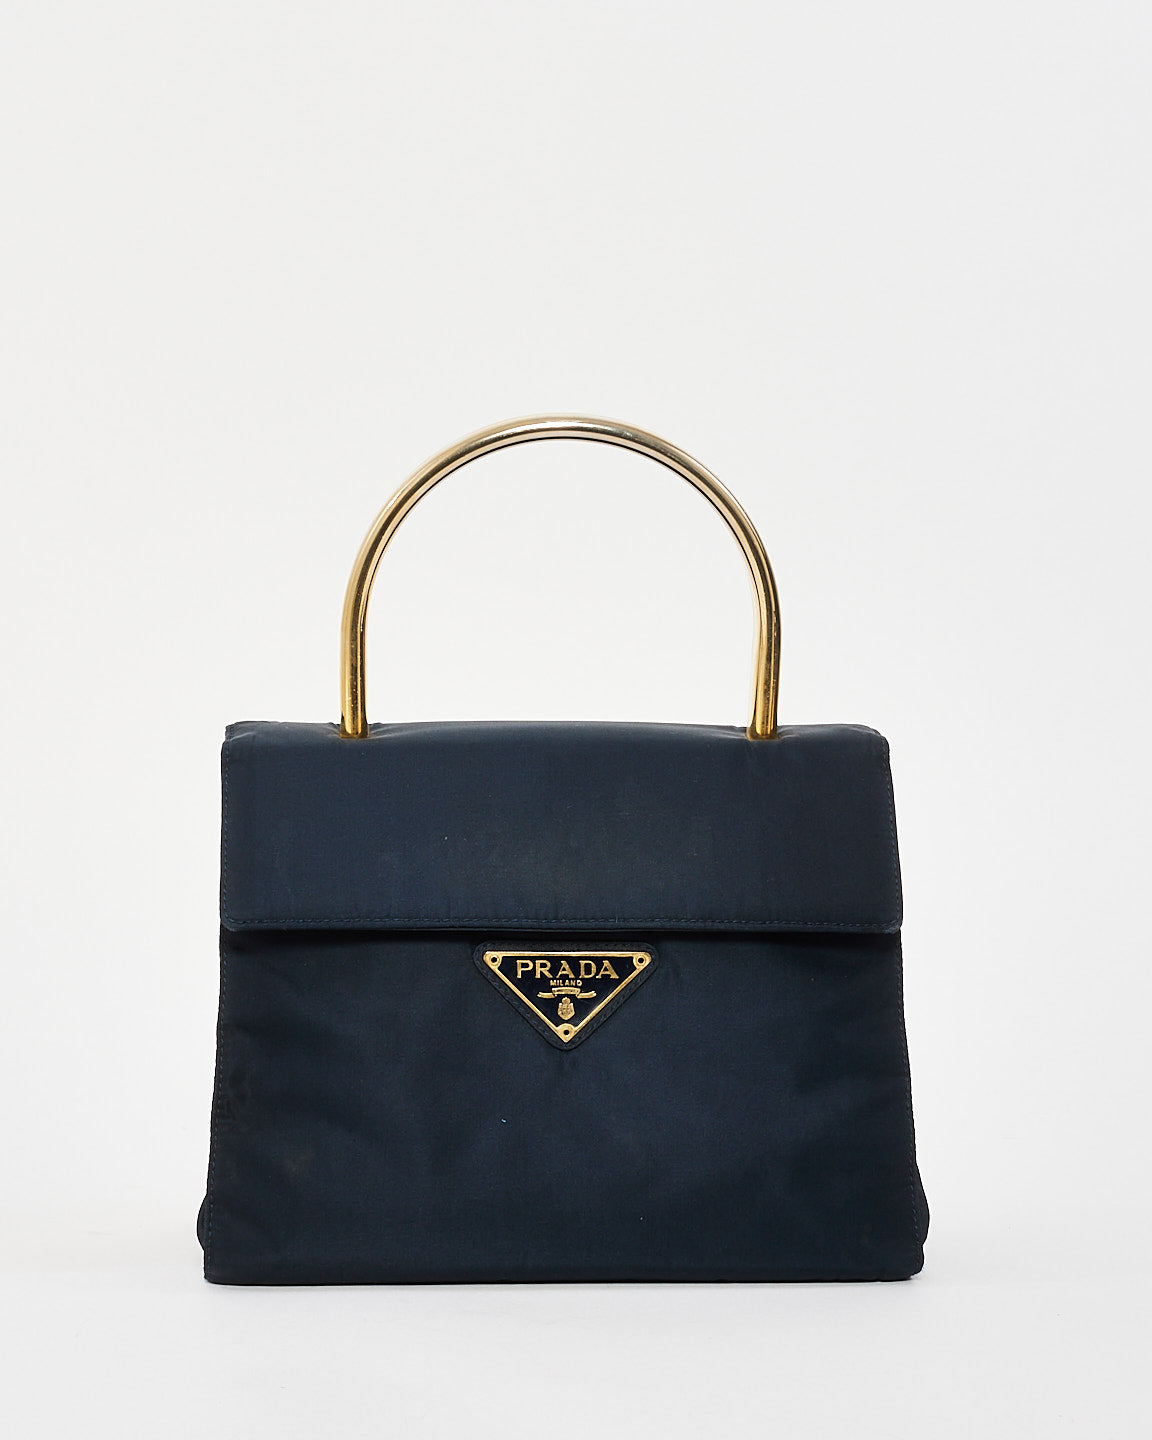 Prada Vintage Black Nylon & Gold Top Handle Bag